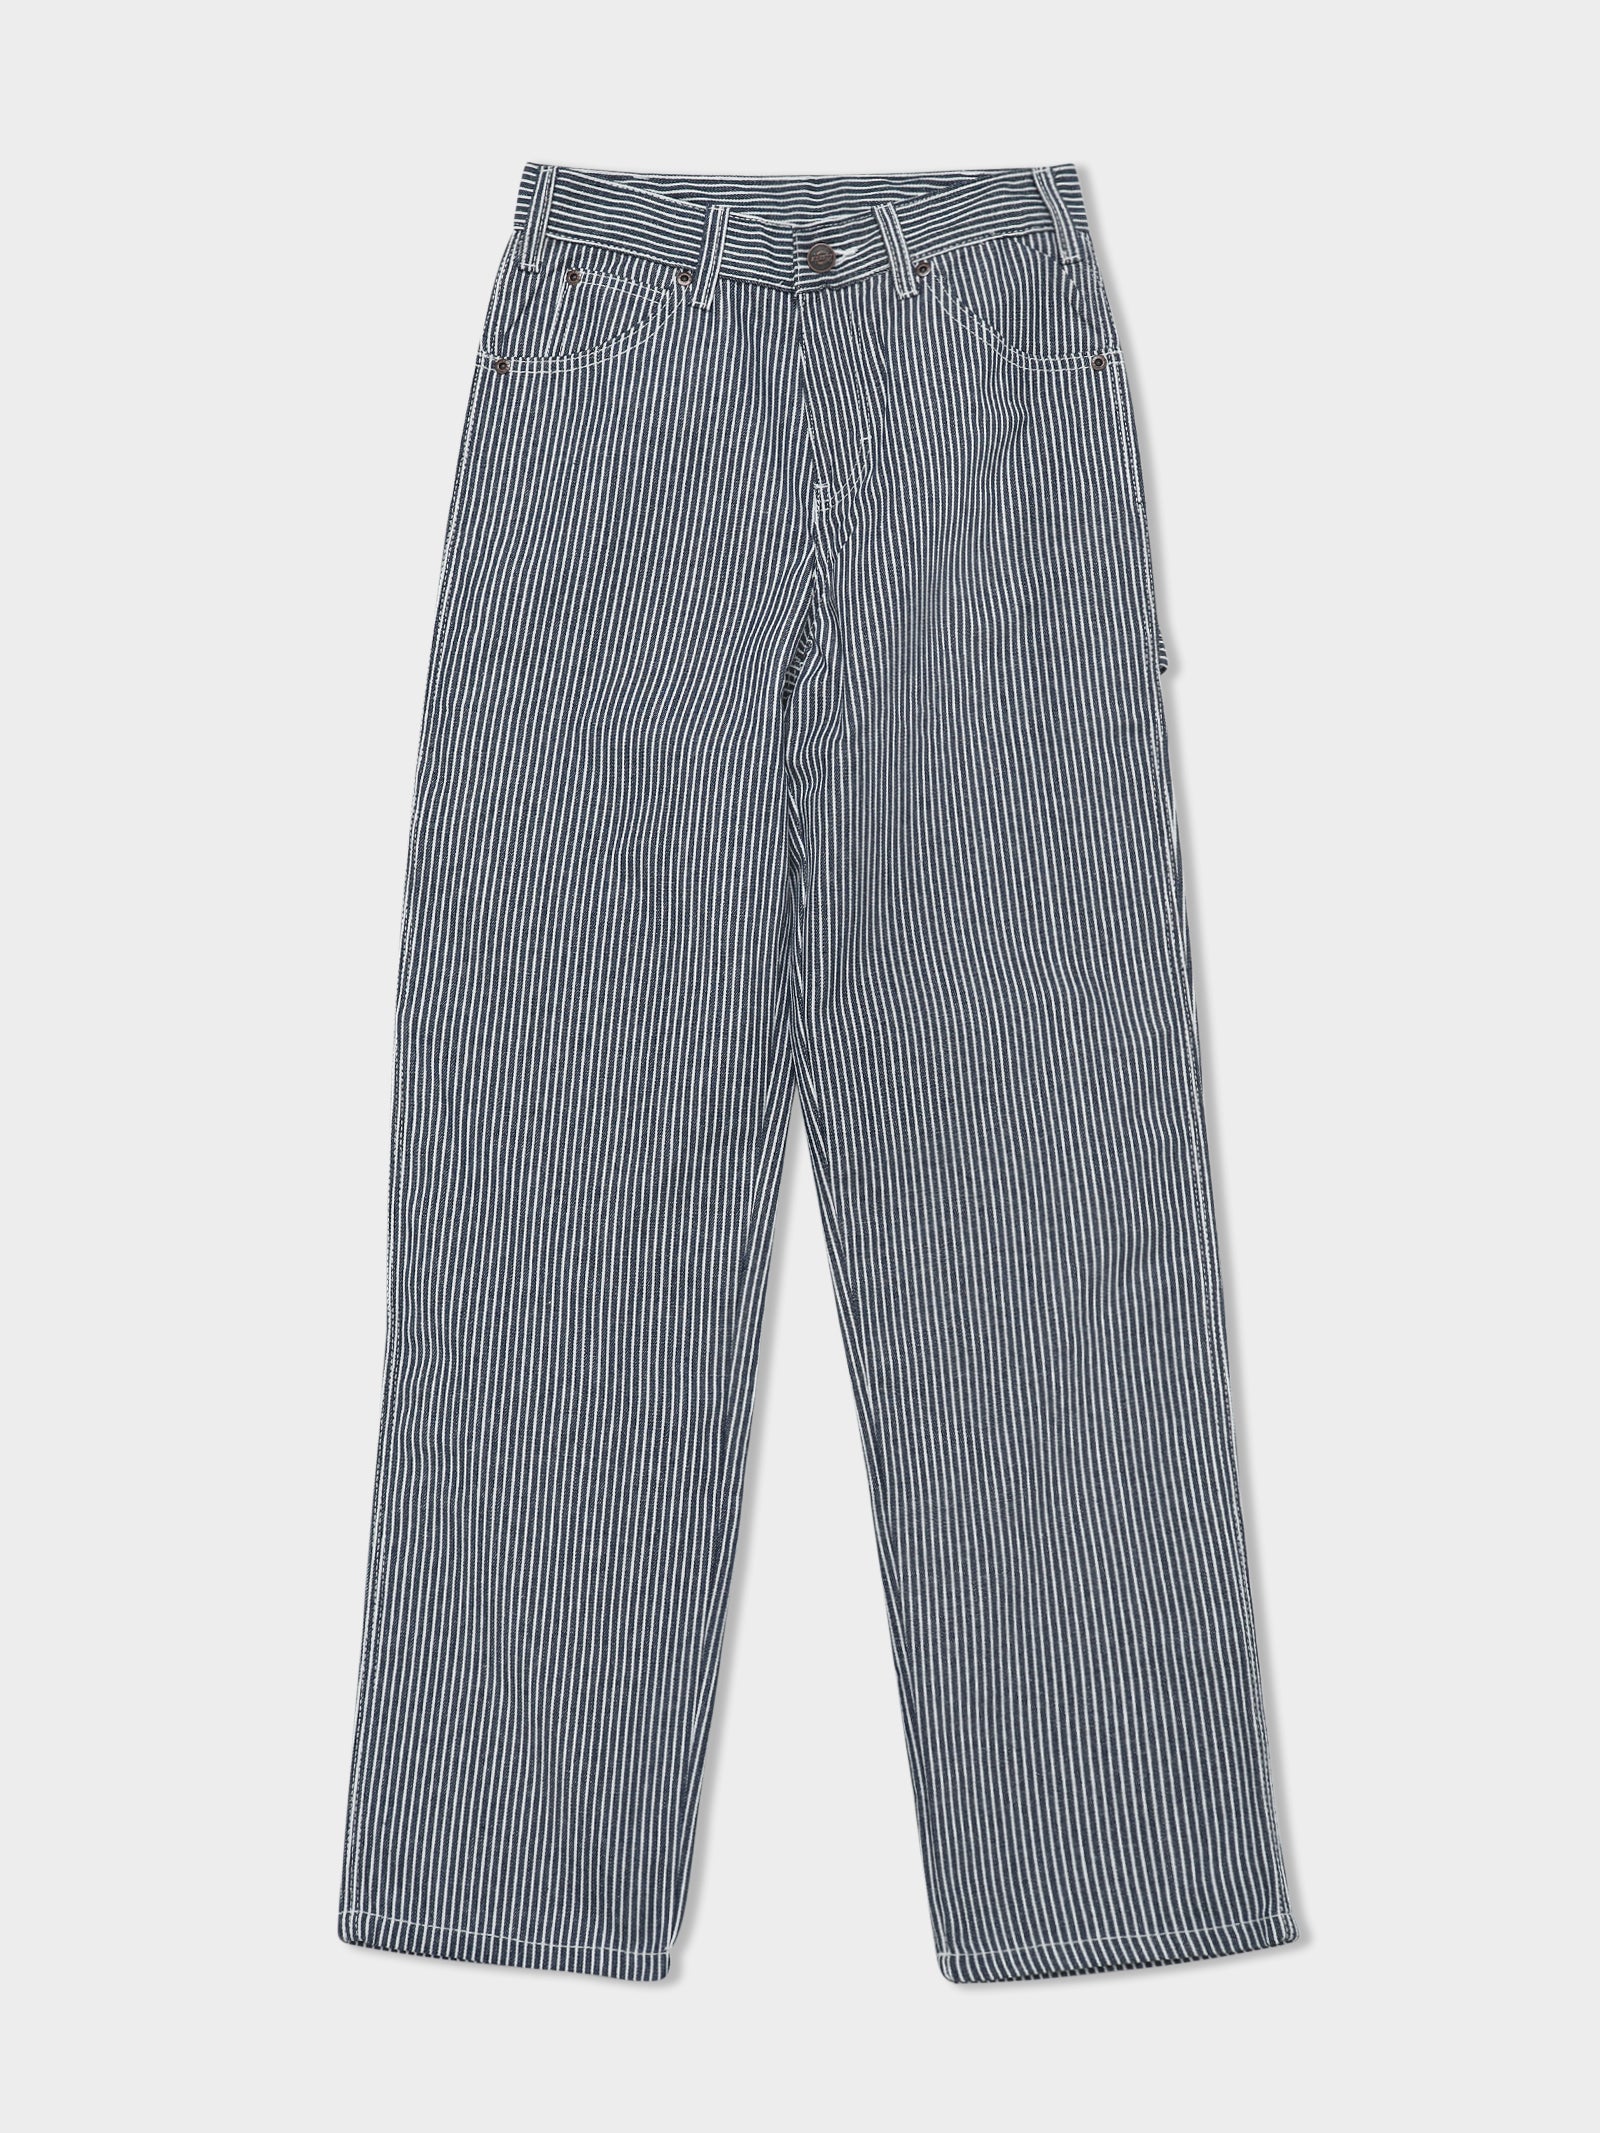 Trenton Carpenter Pants in Navy & White - Glue Store